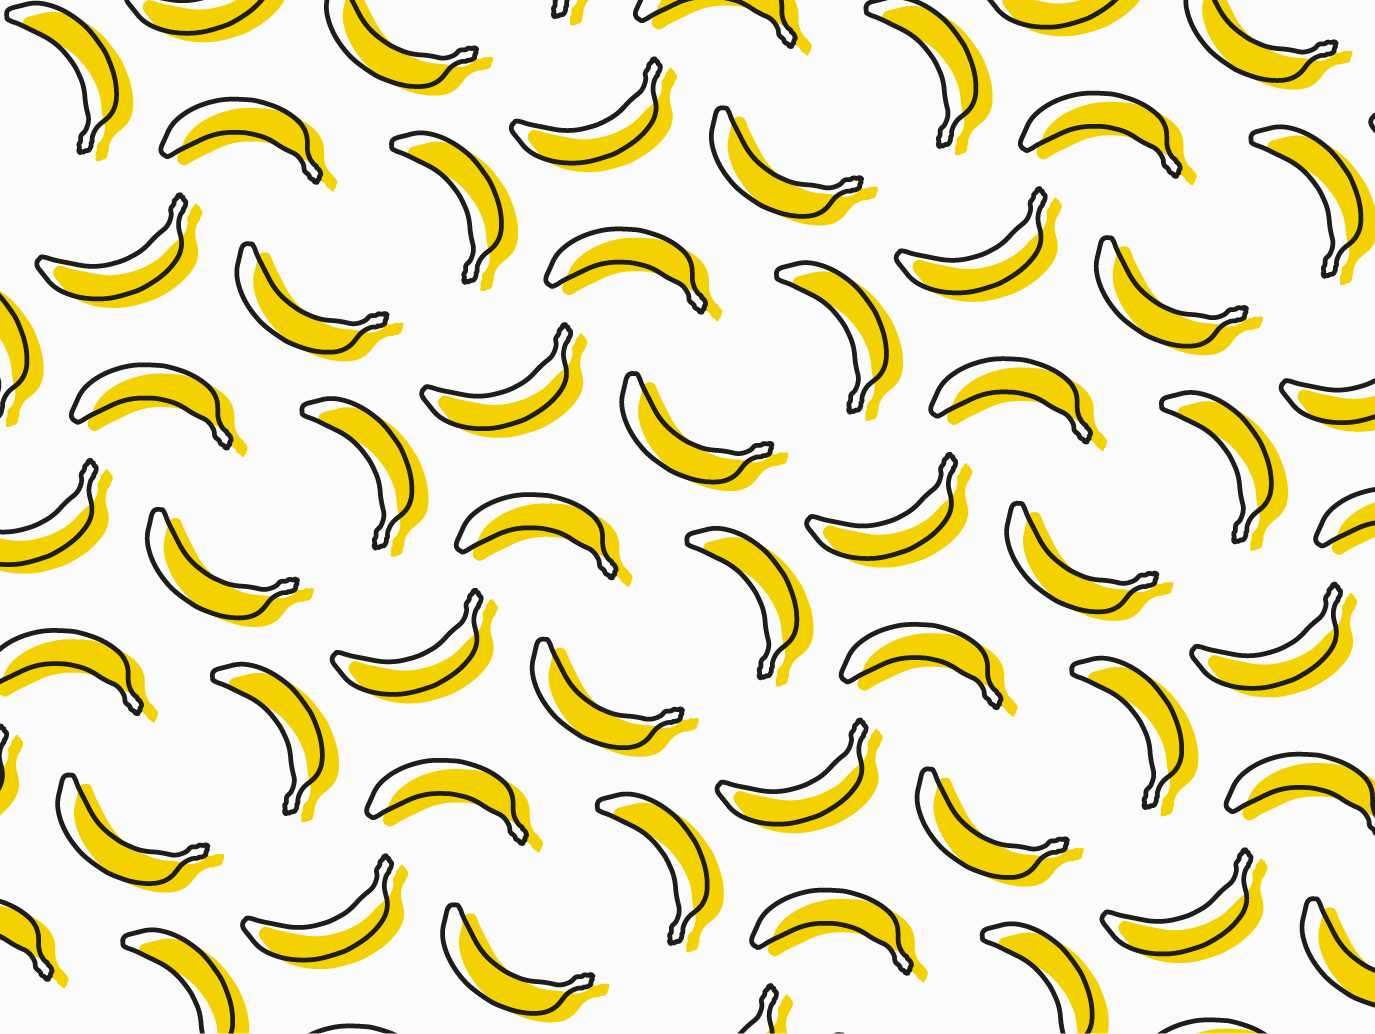 banana patter design